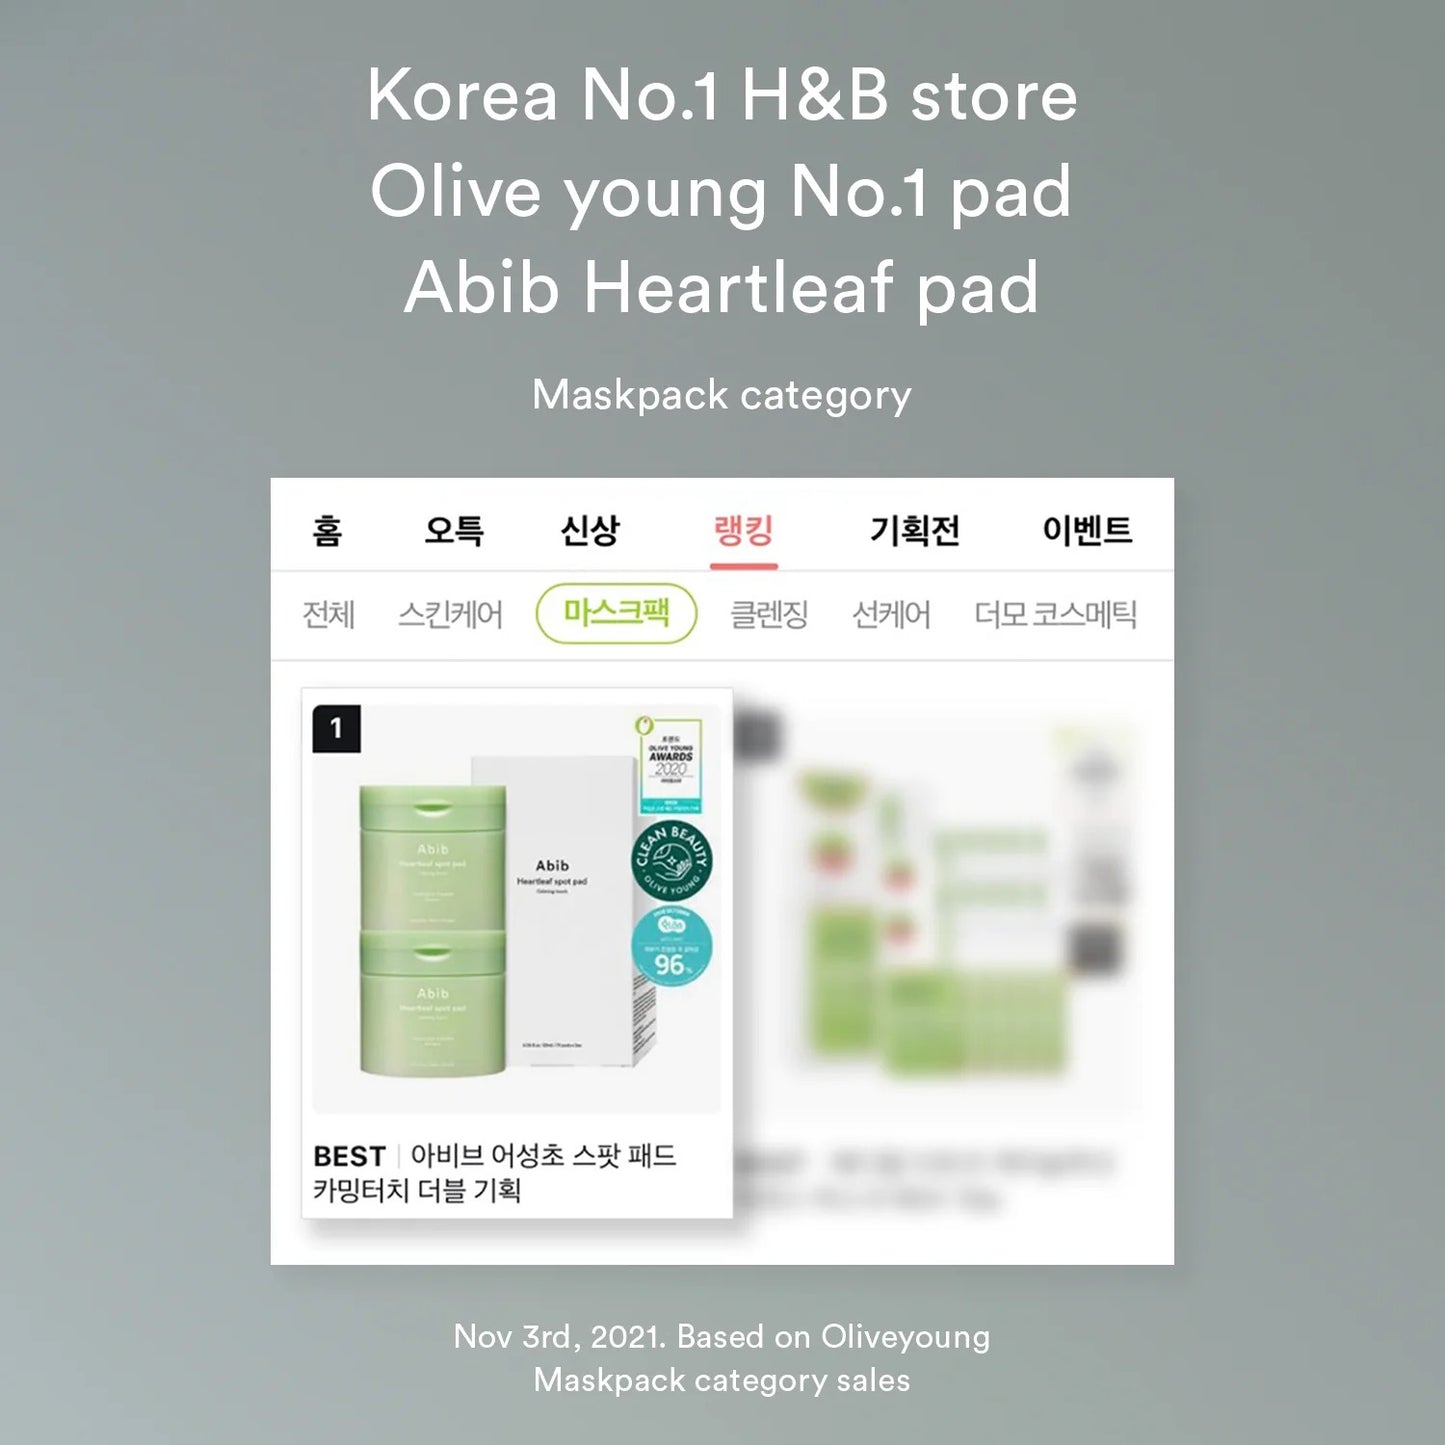 Abib Heartleaf spot pad Calming touch - 150ml. 80 pads